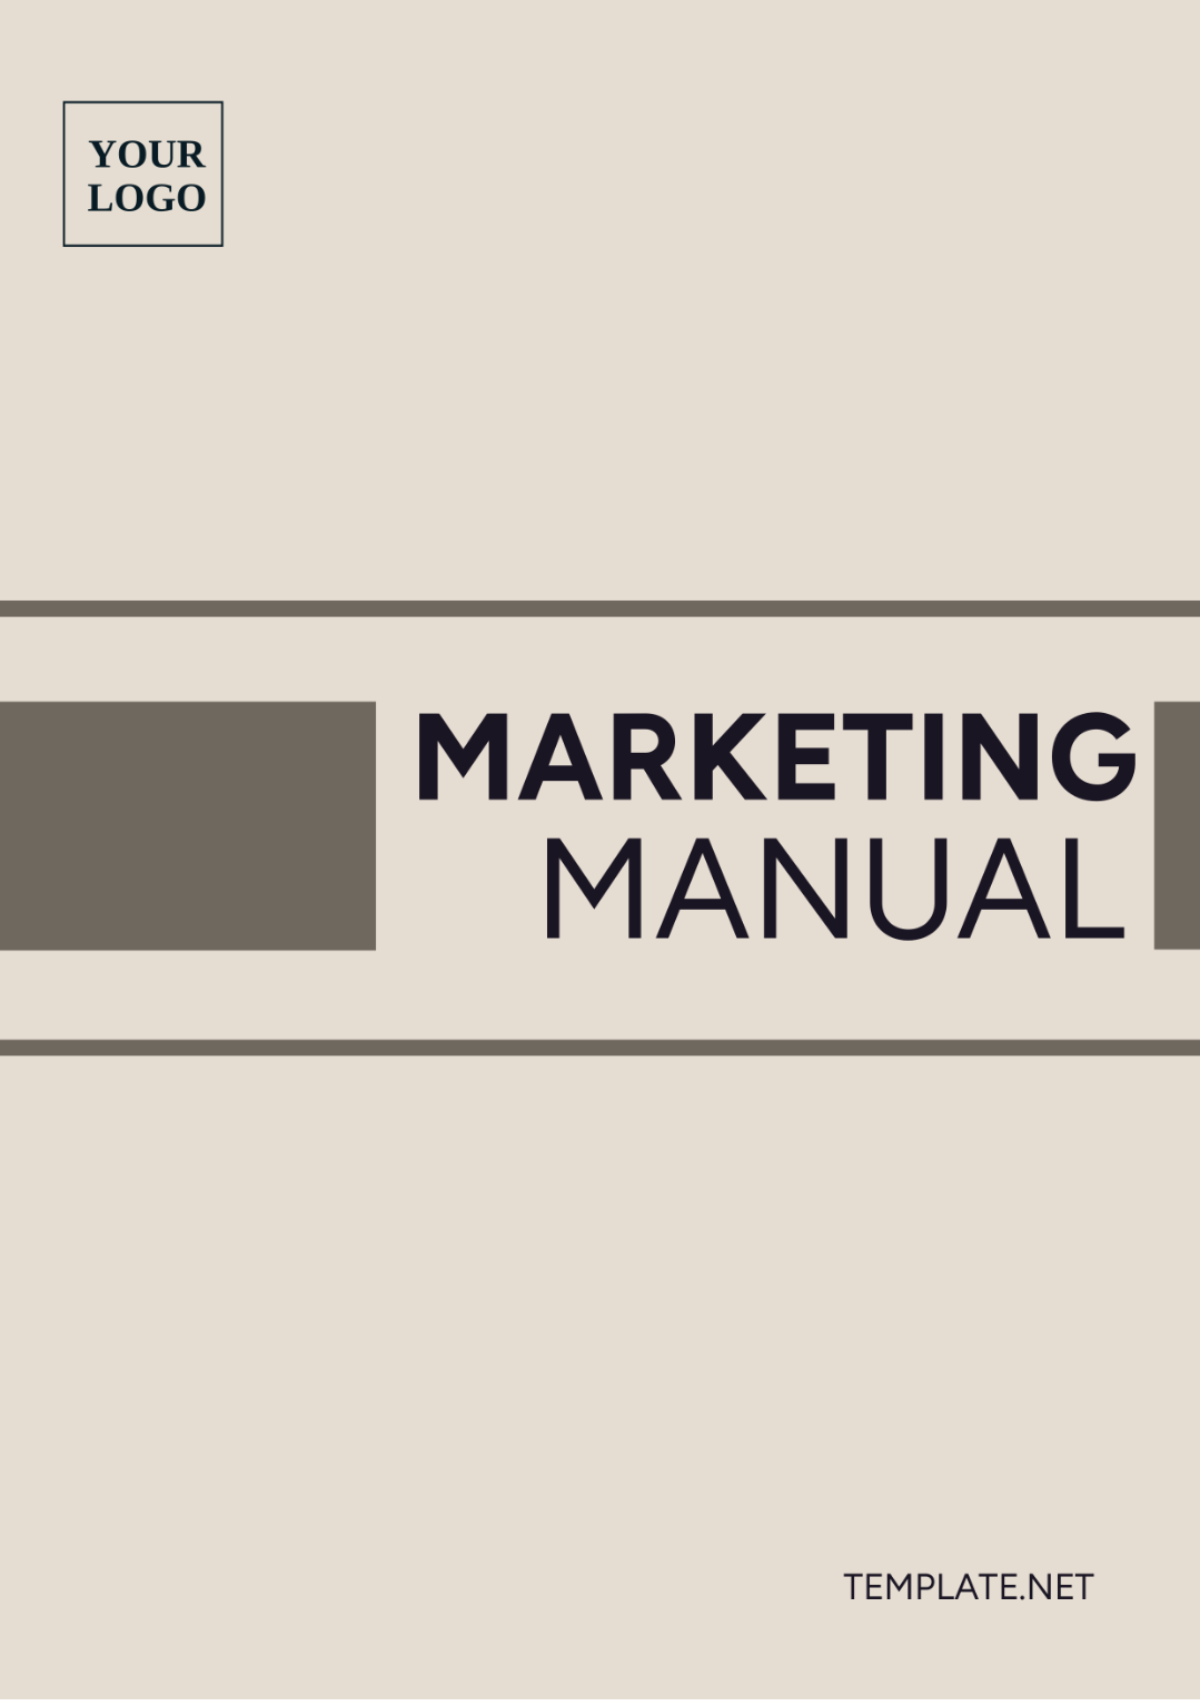 Marketing Manual Template